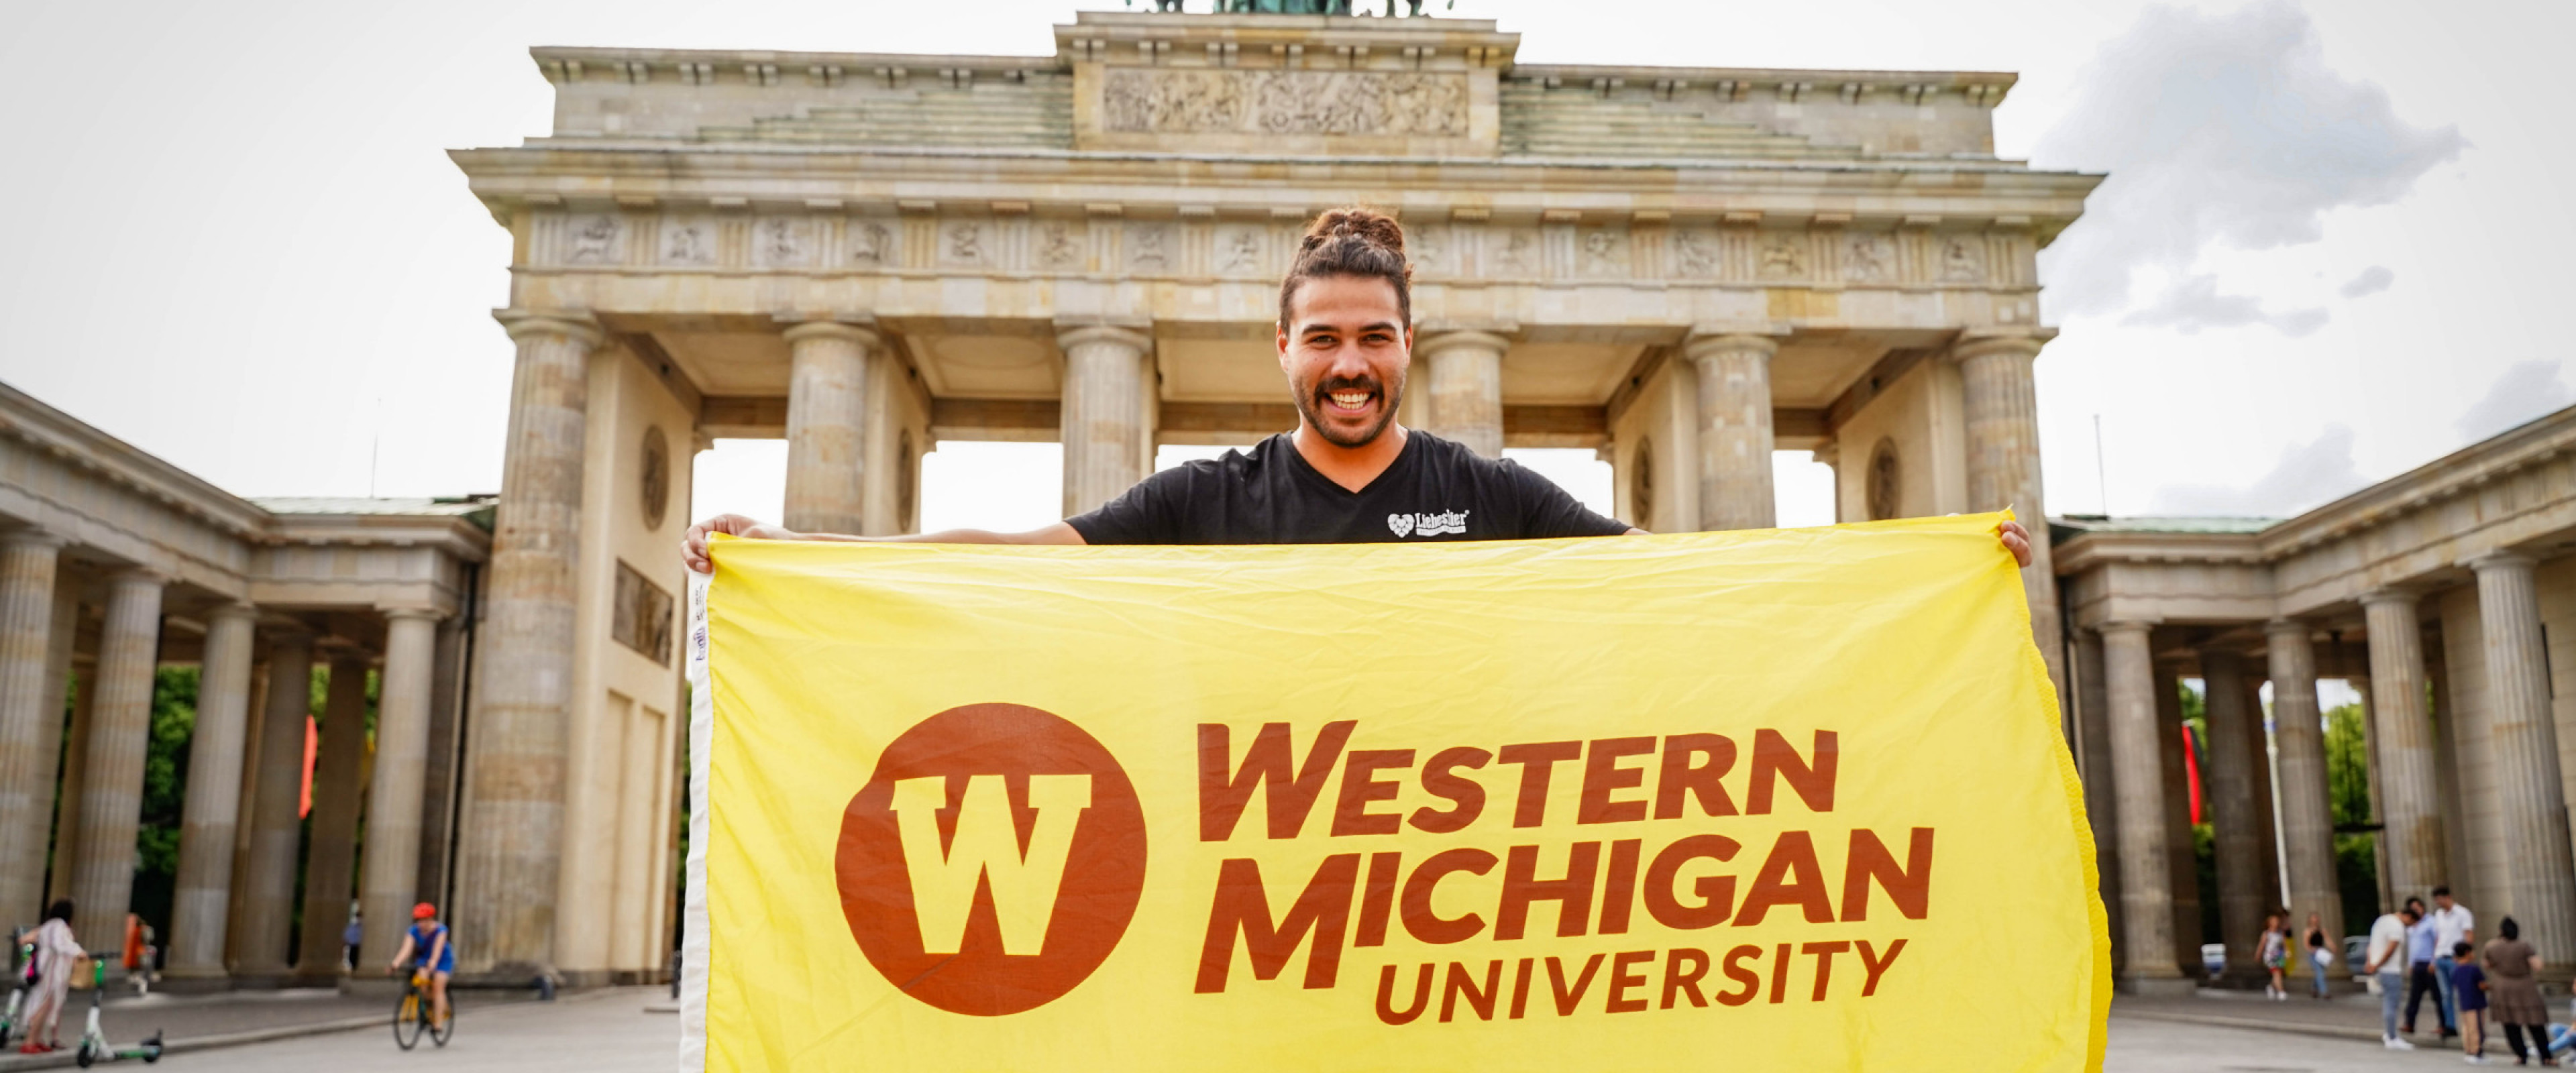 Alumnus holding W flag in Germany